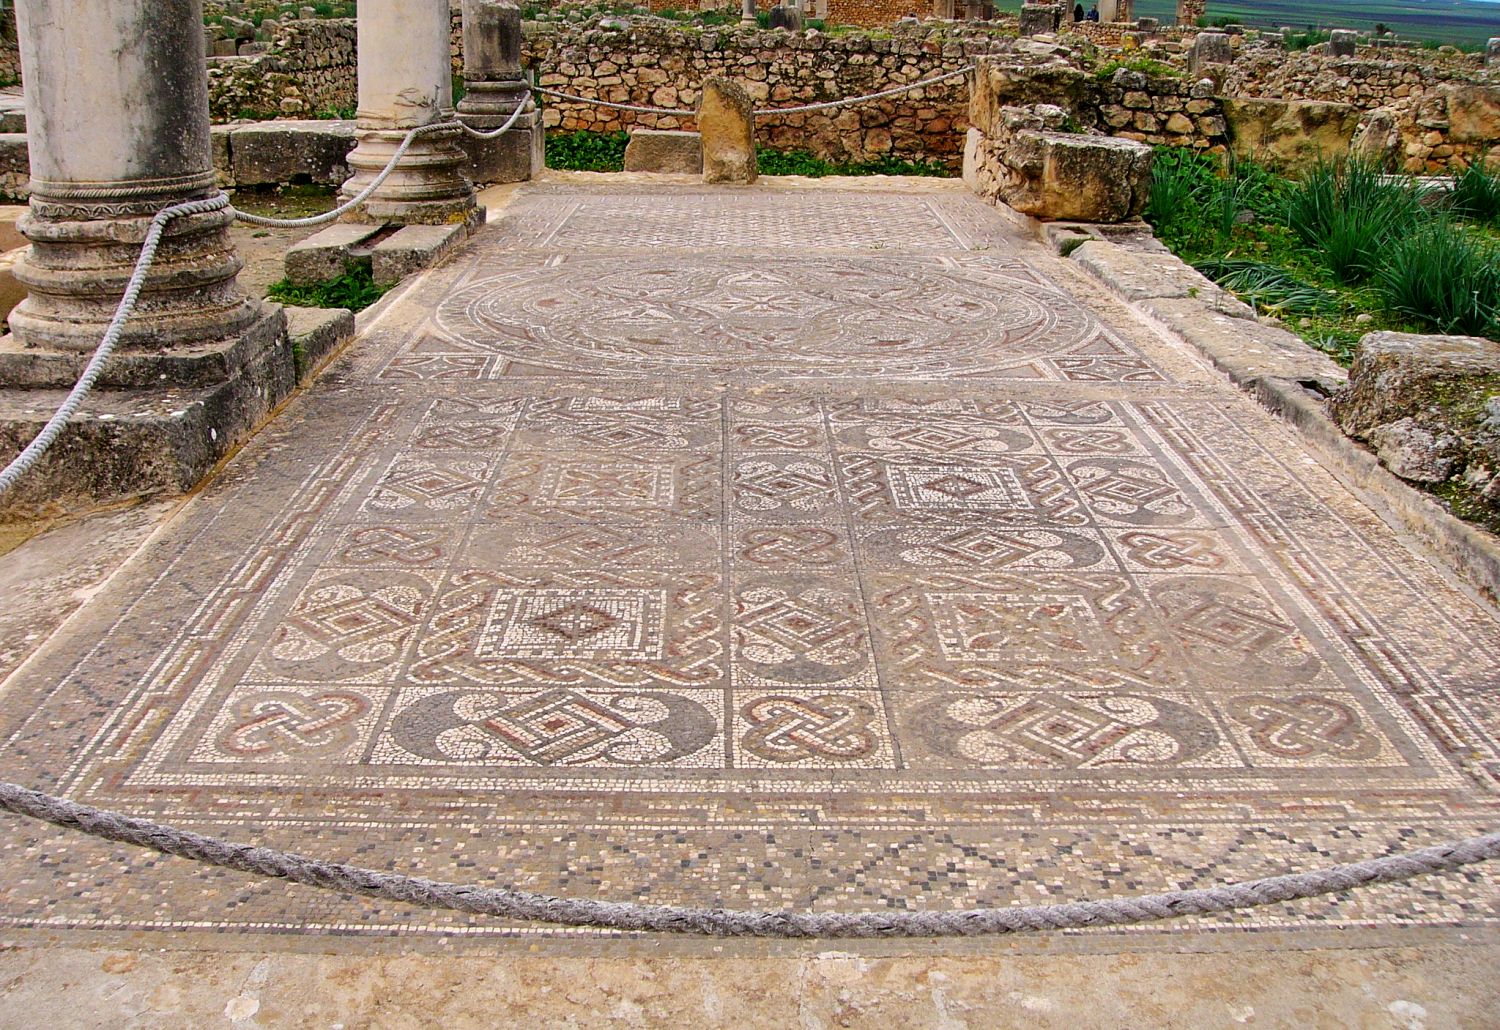 Intact mosaic floor in Volubilis